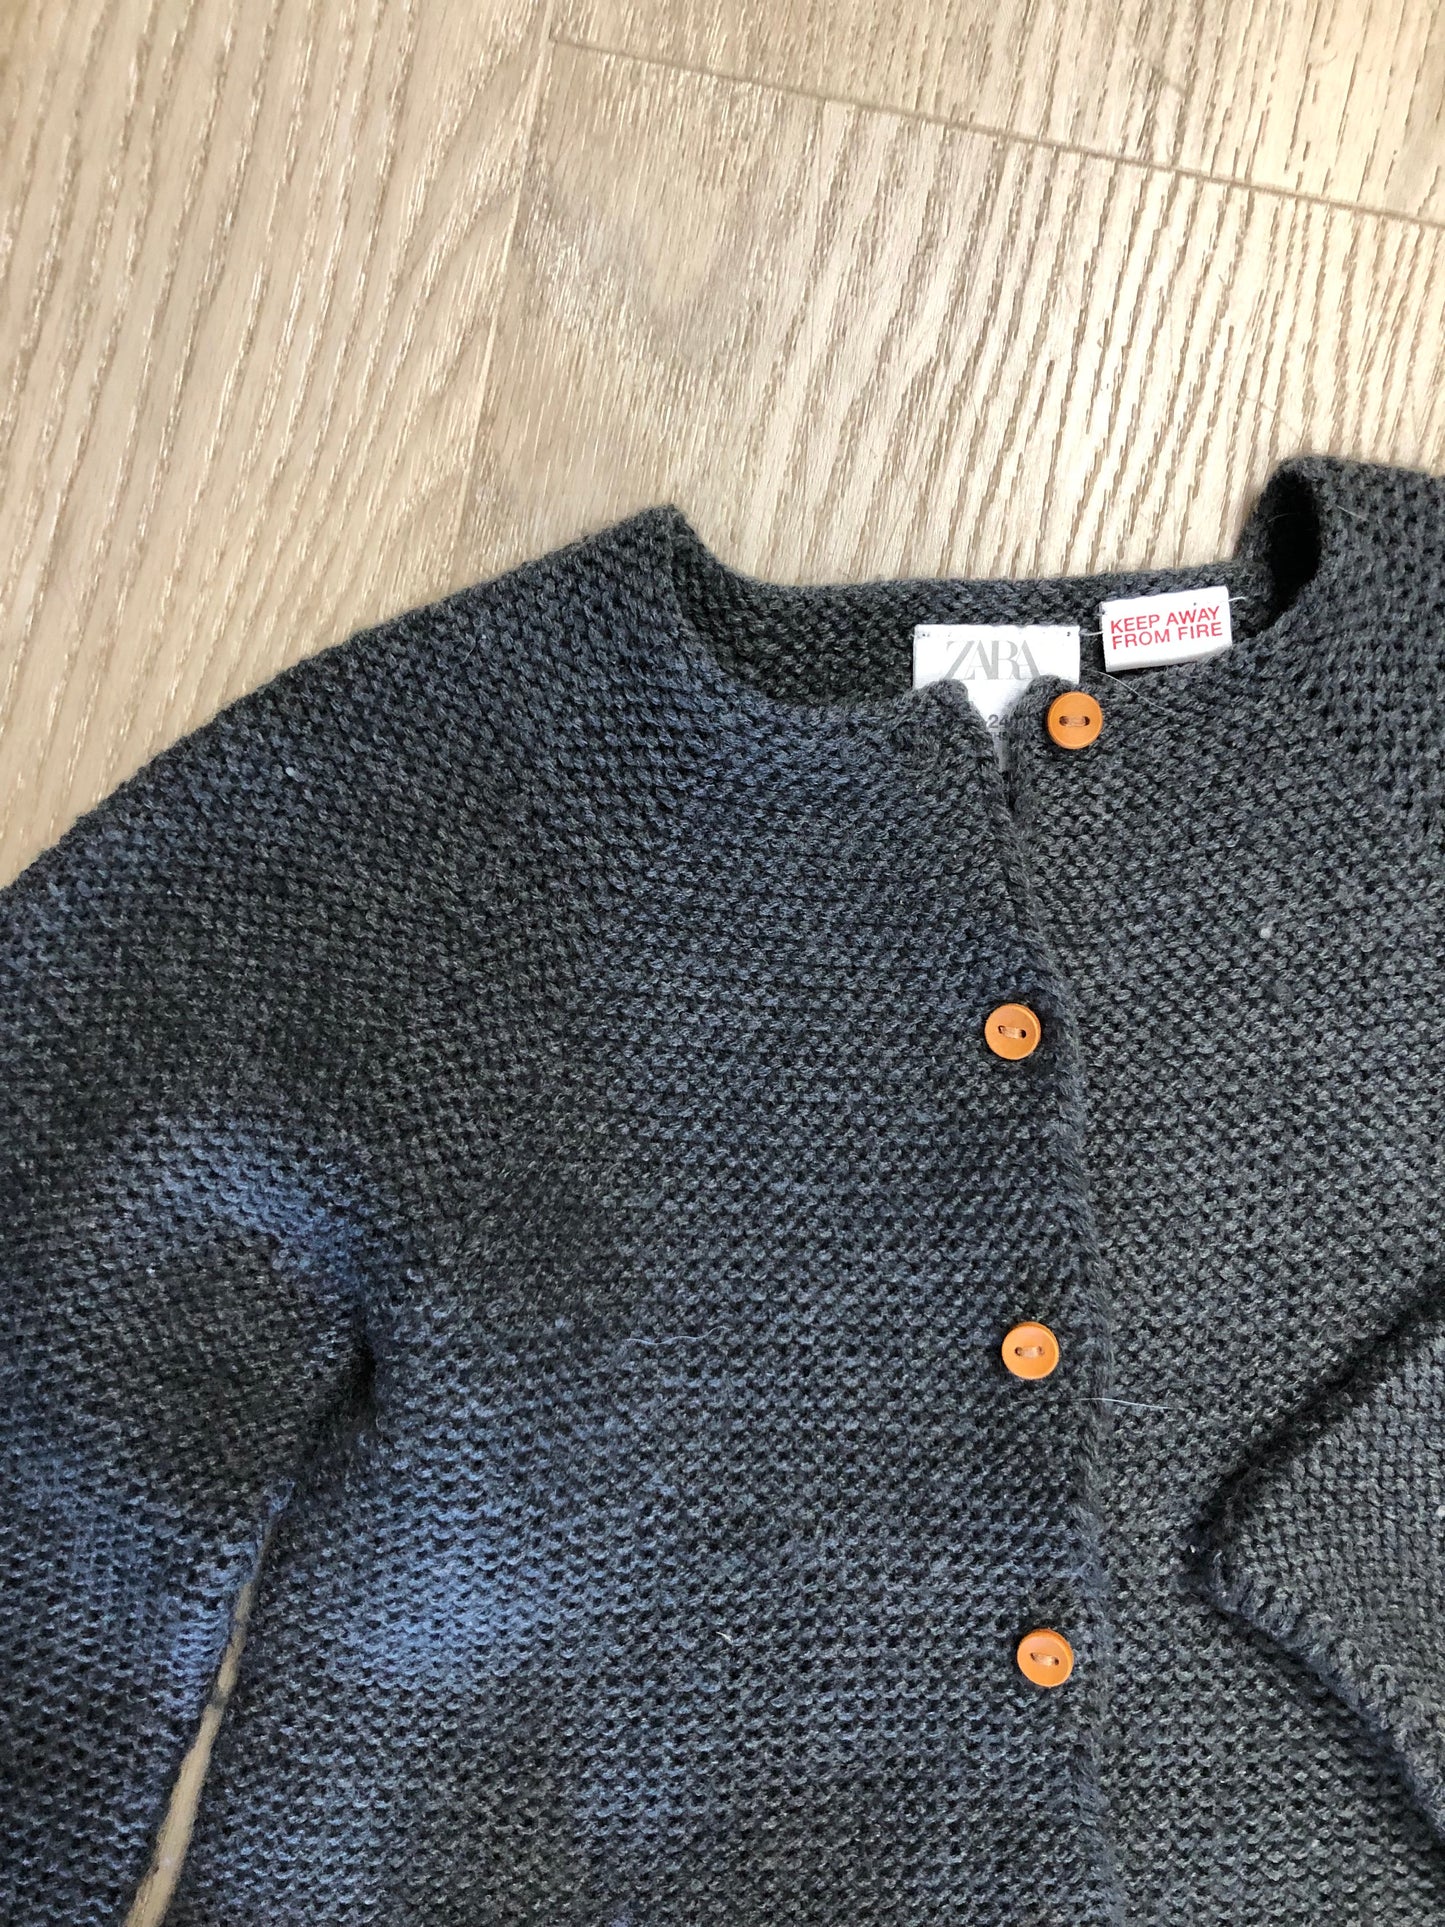 Zara Child Size 12 Months Charcoal knit Sweater